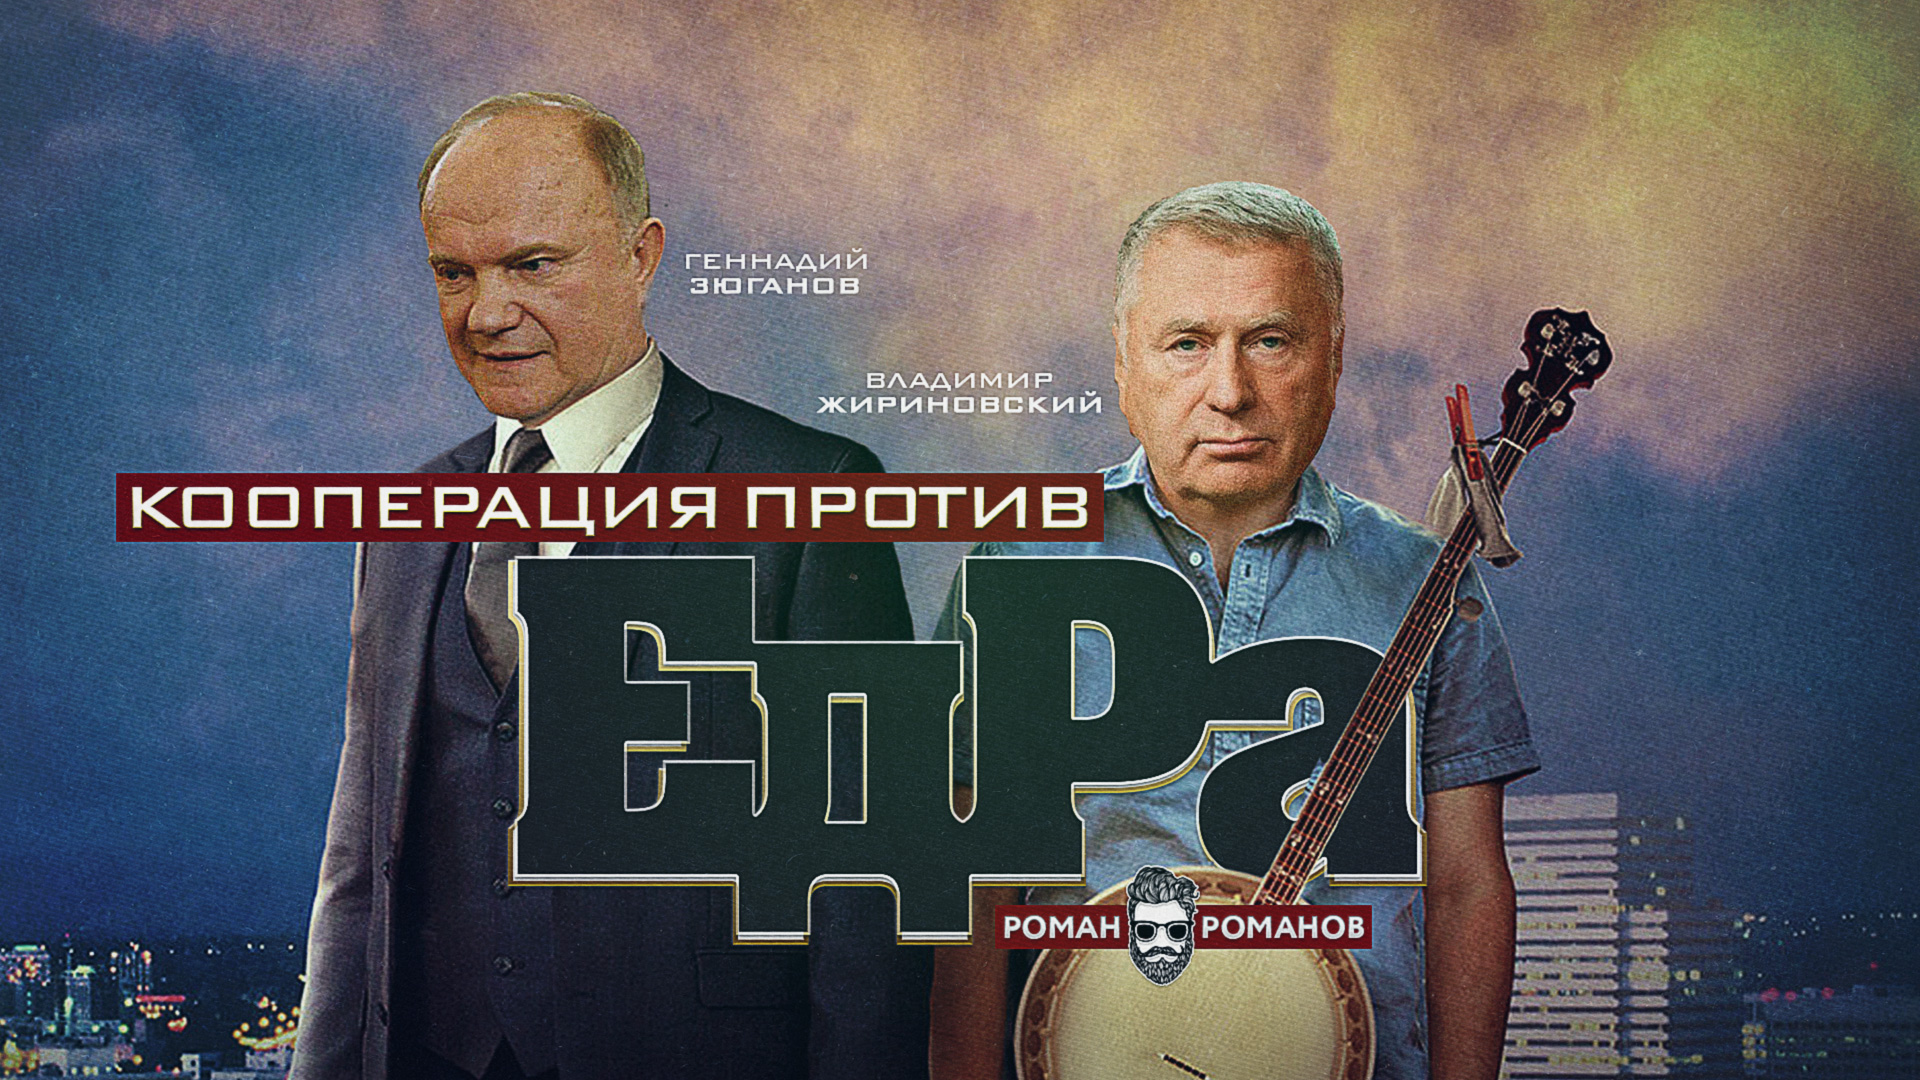 Зюганов против Жириновского